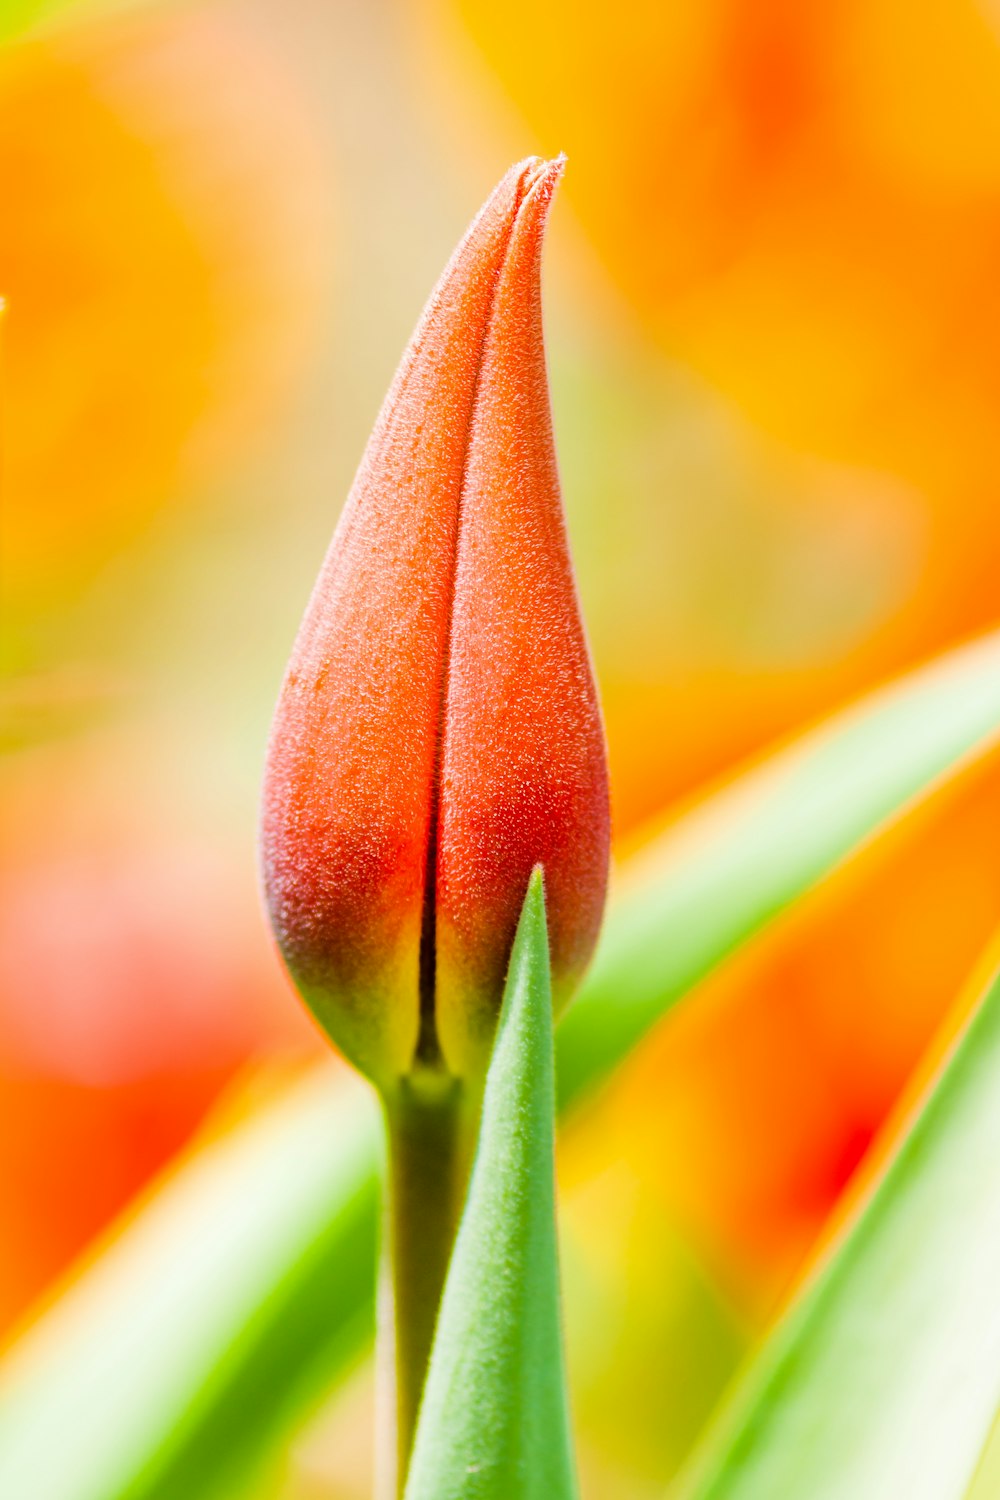 capullo de tulipán naranja